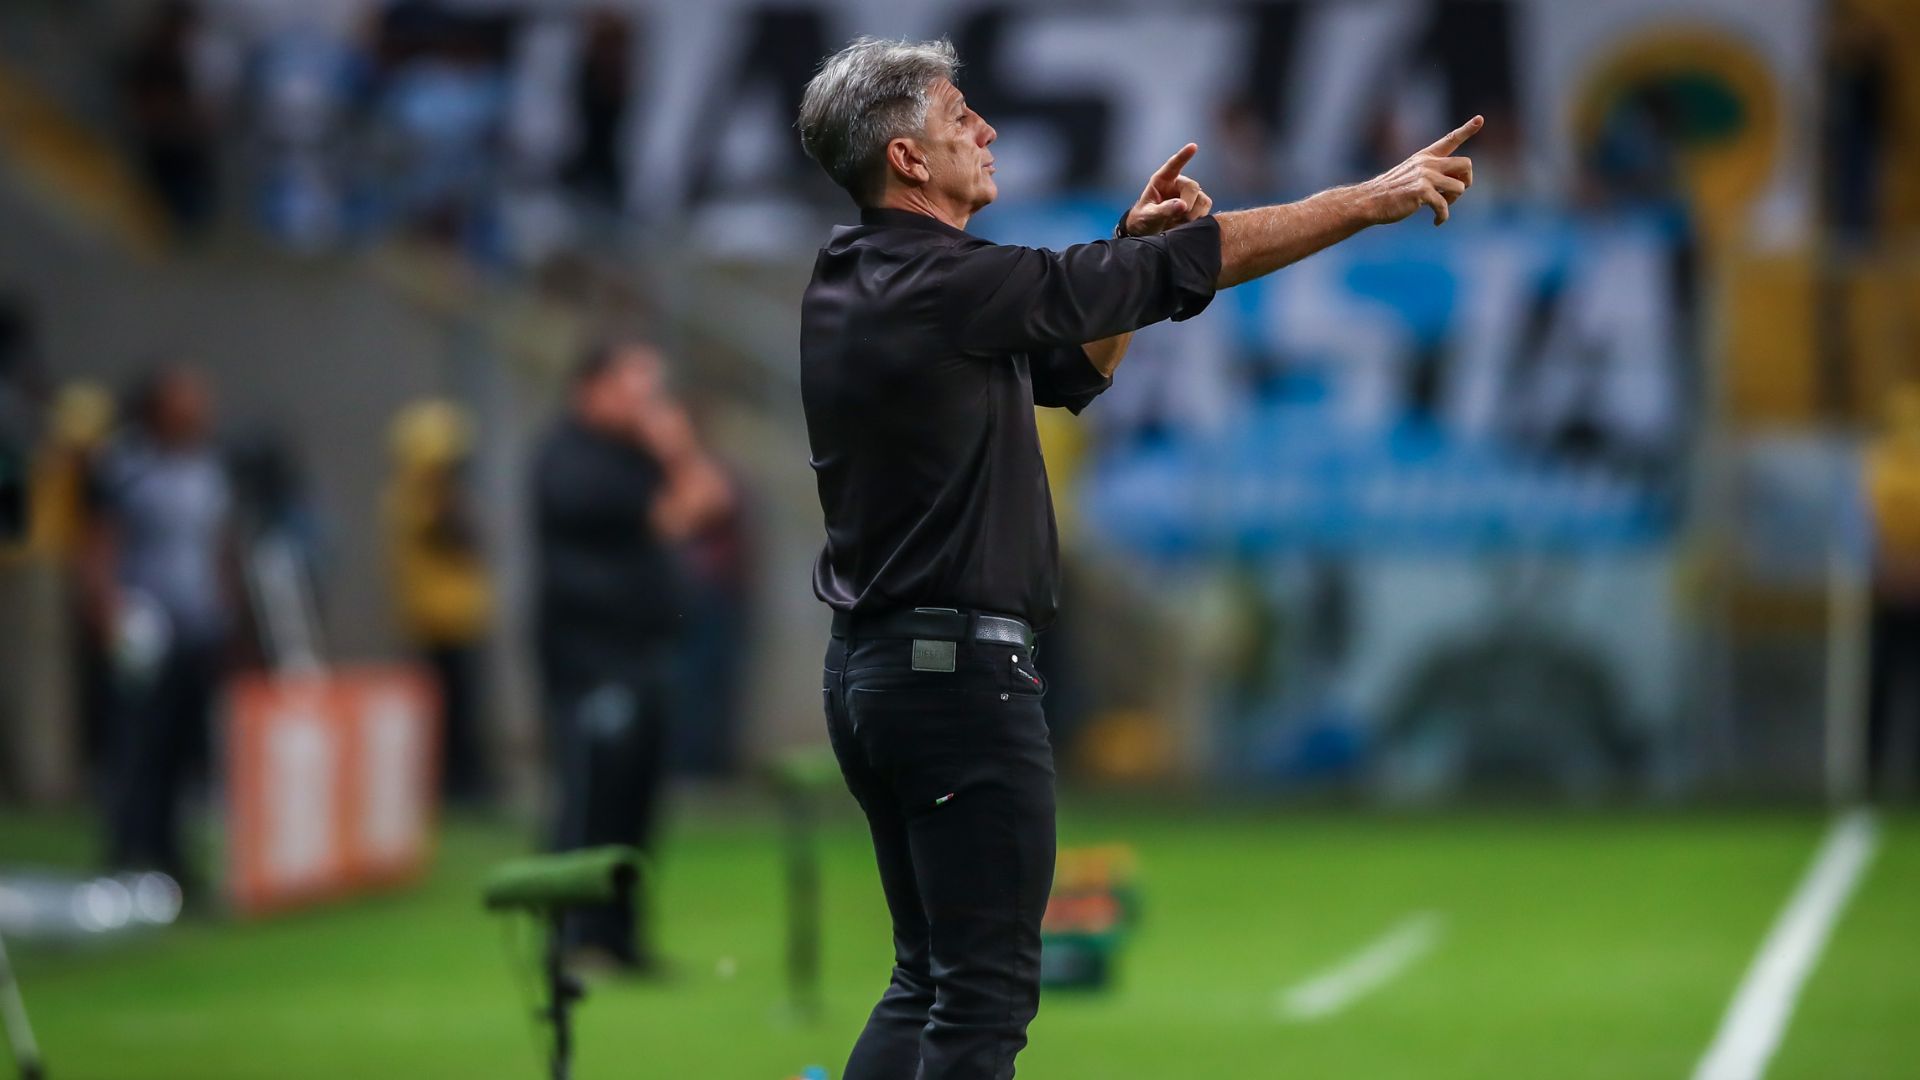 Renato Gaúcho, coach of Grêmio